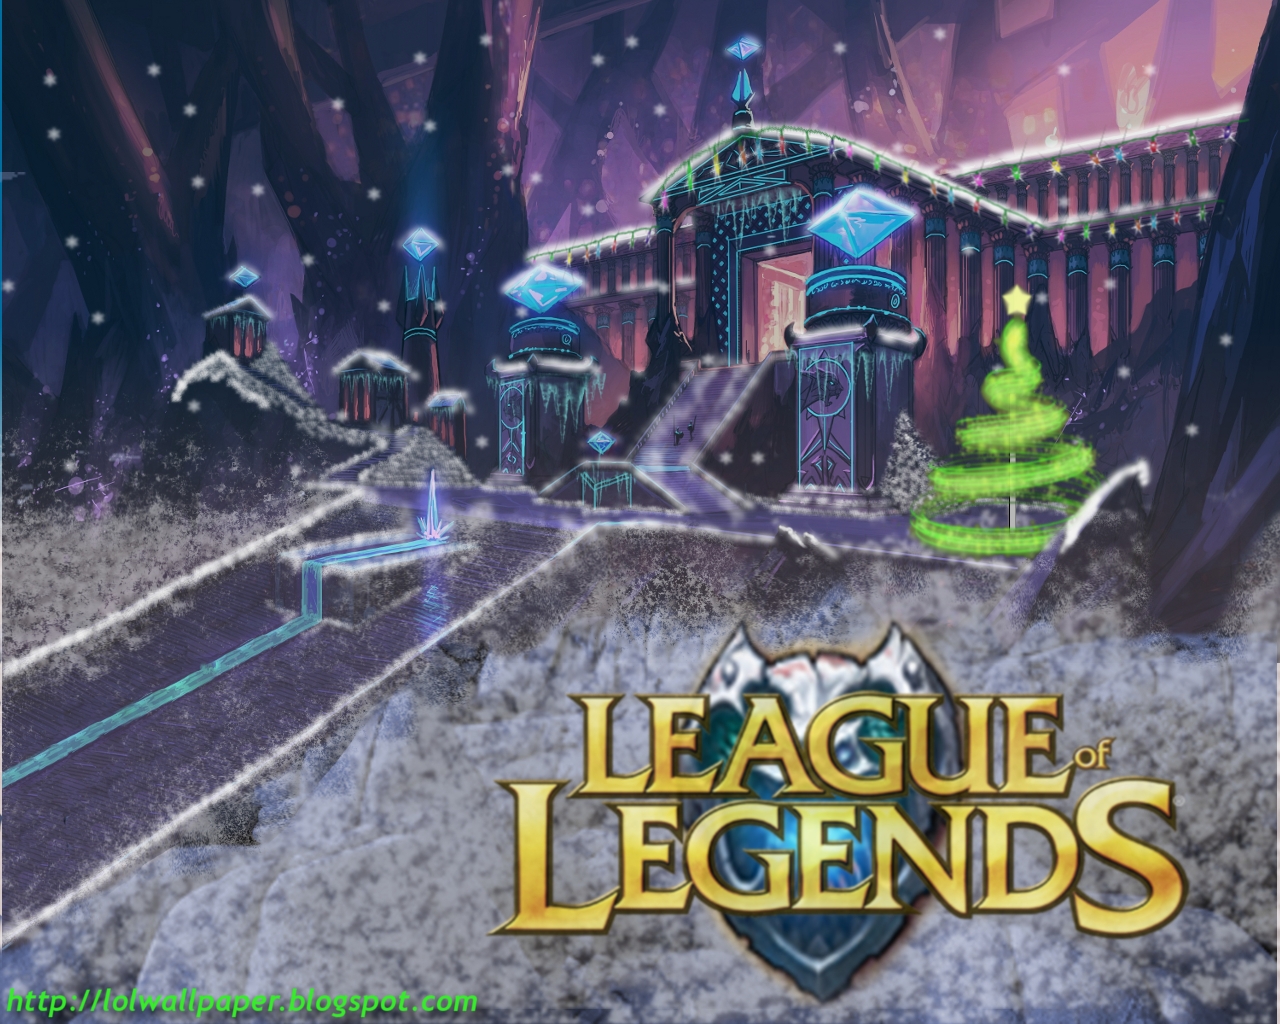 League of Legends Wallpaper: League of Legends Christmas Wallpaper